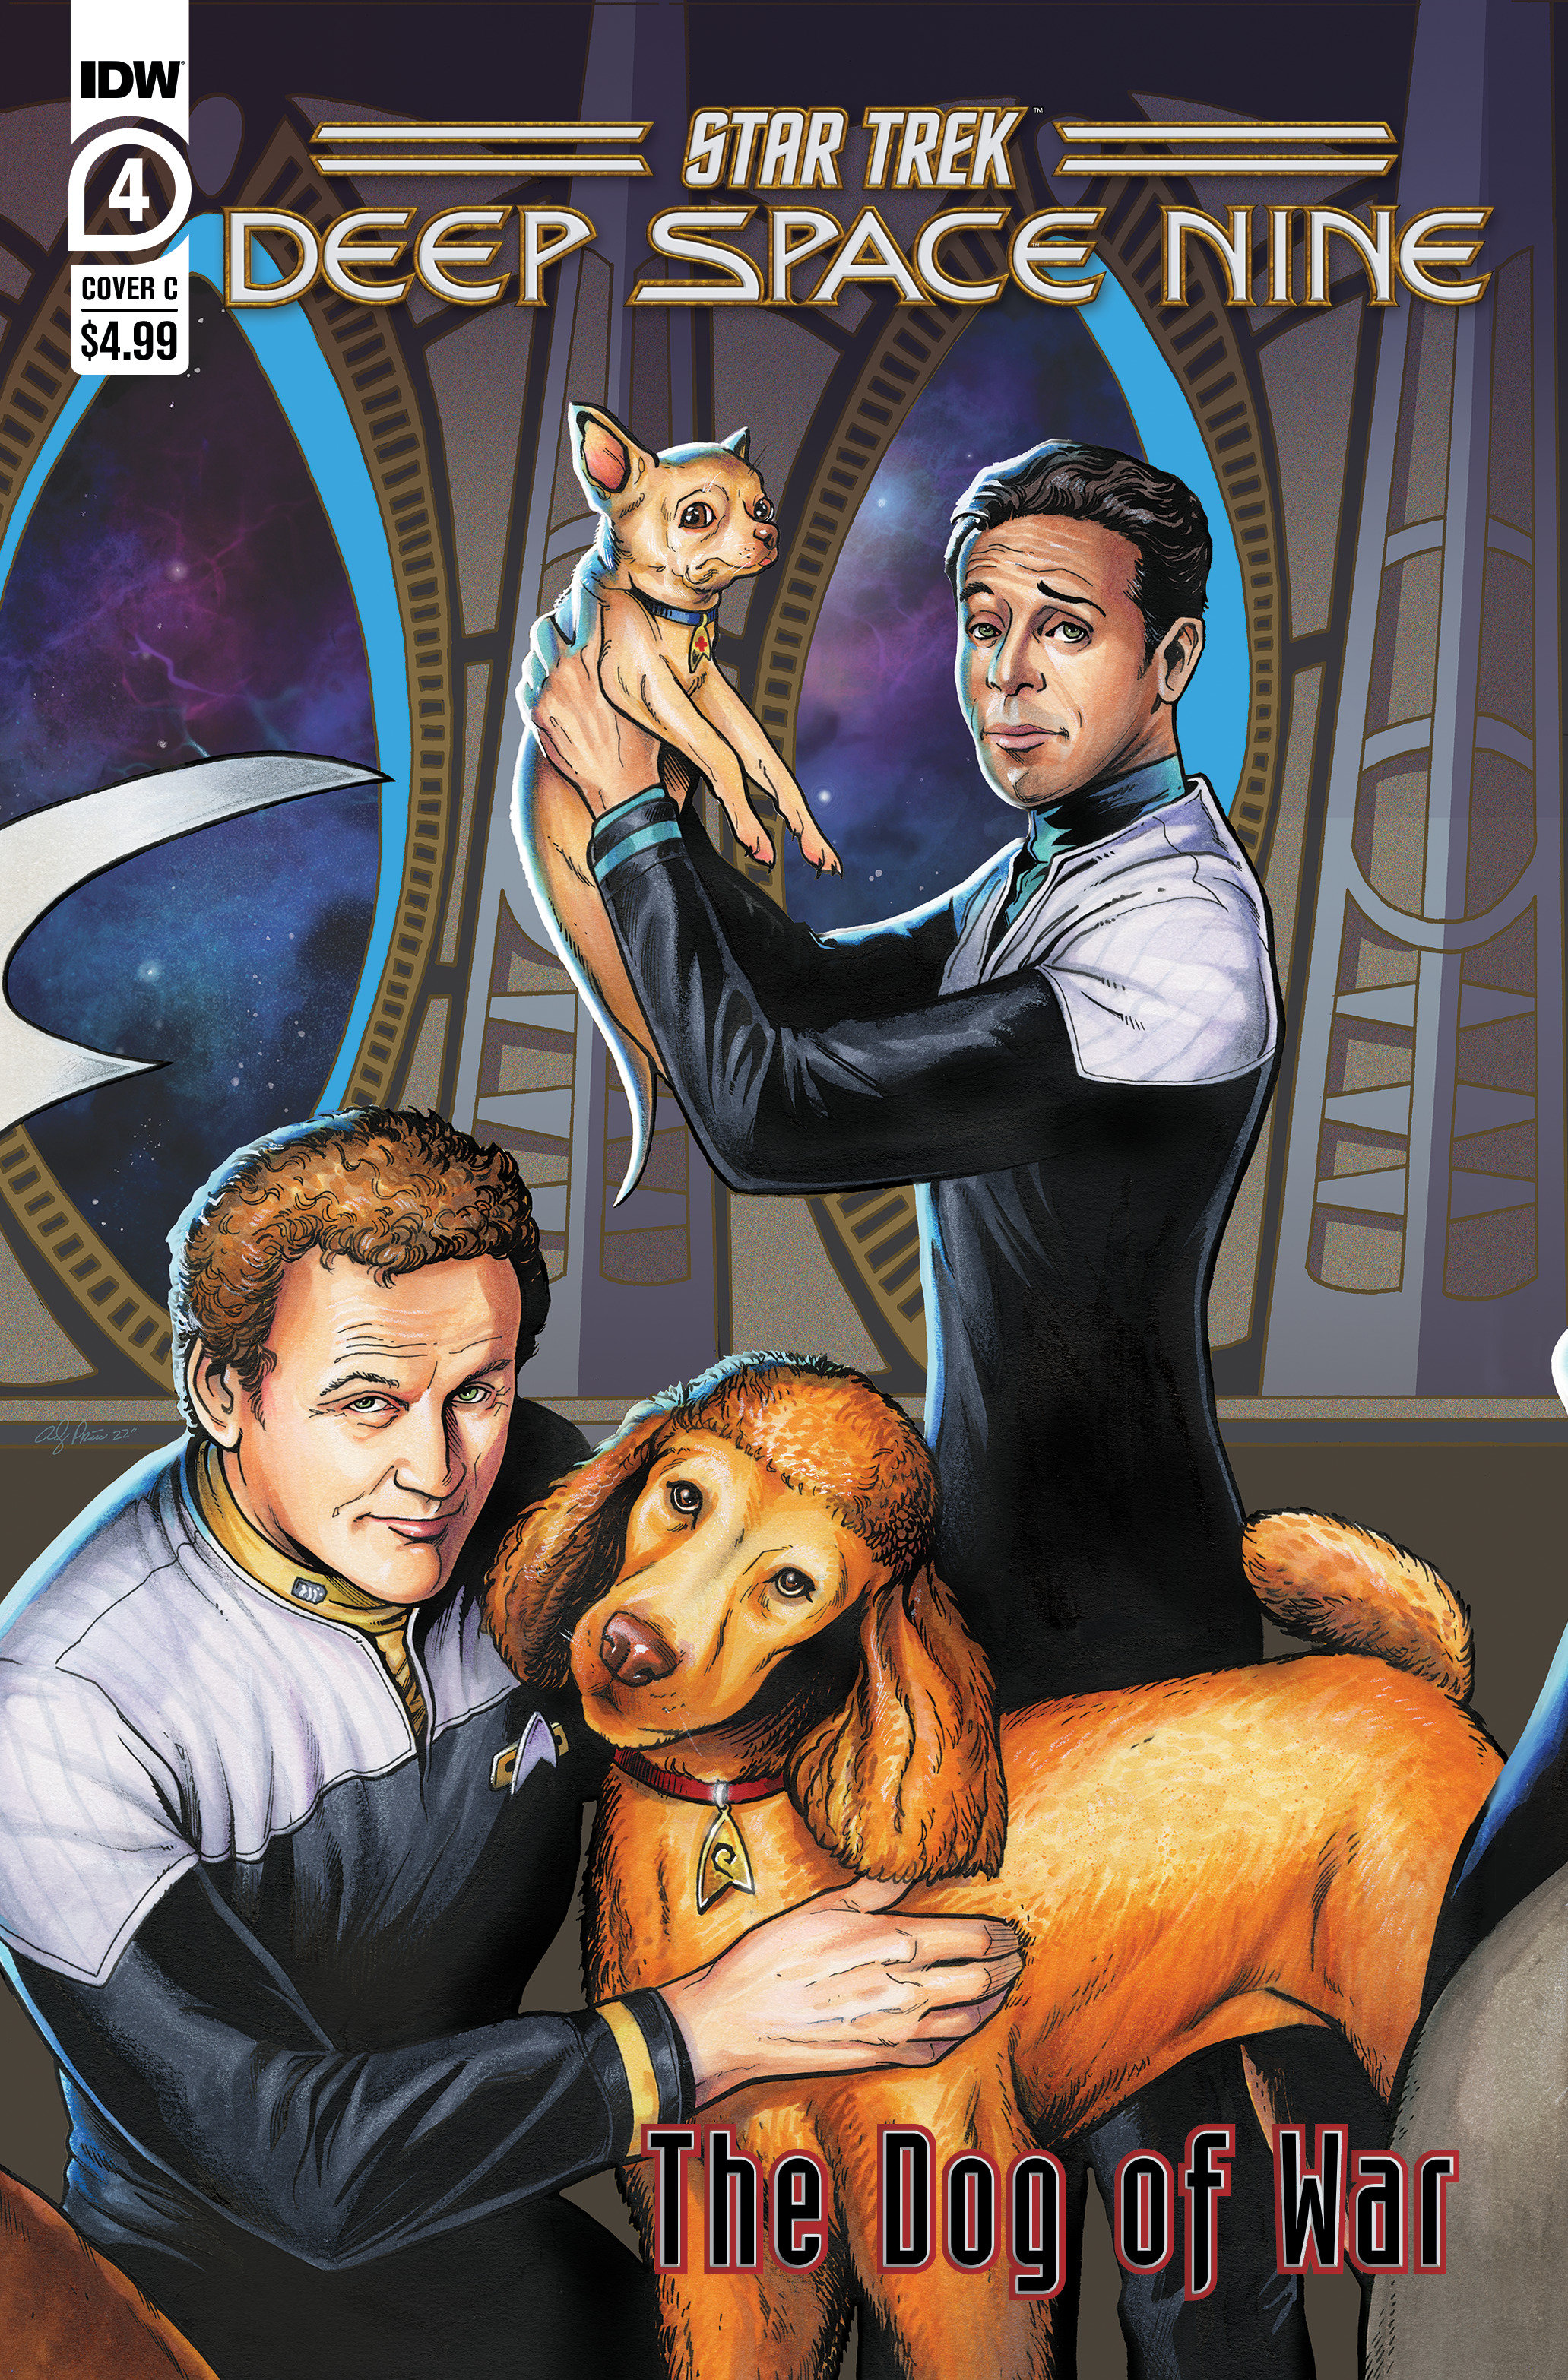 Star Trek Deep Space Nine The Dog of War #4 Cover C Price